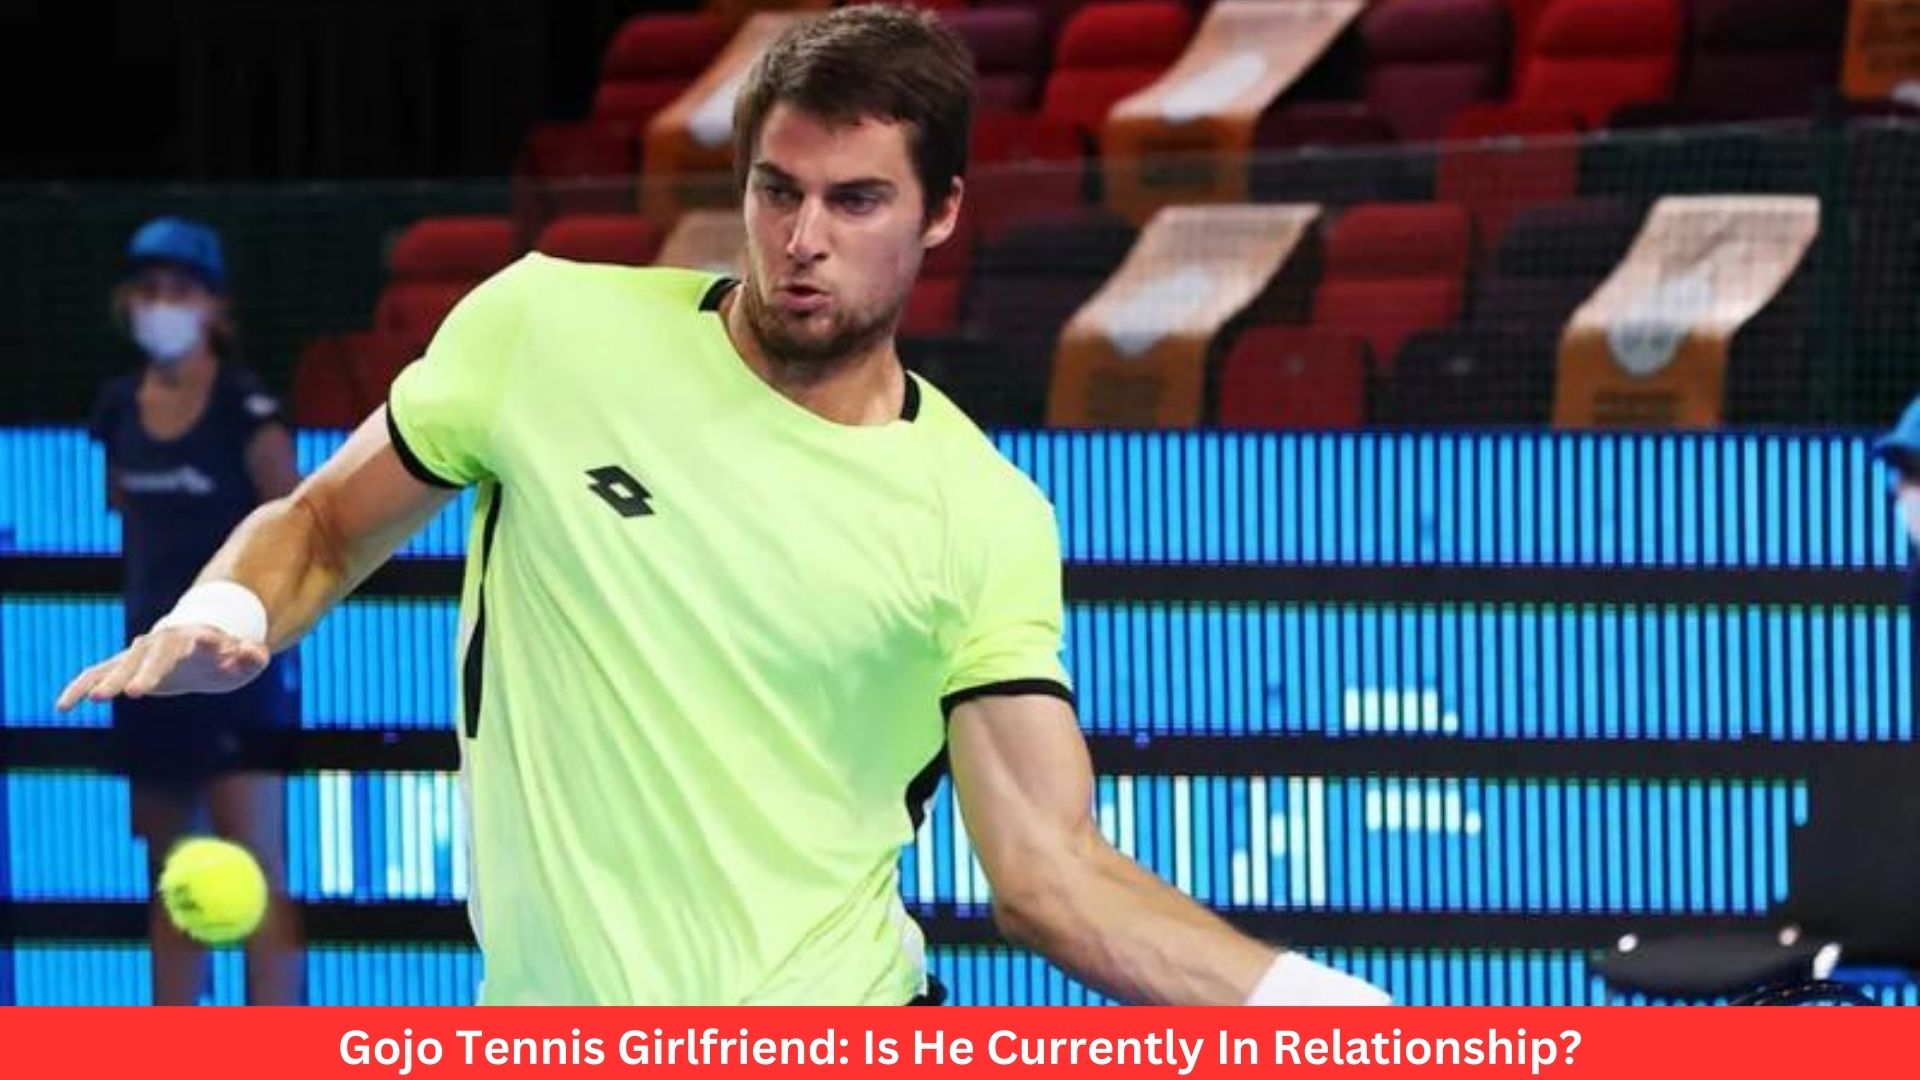 Gojo Tennis Girlfriend: Is He Currently In Relationship?